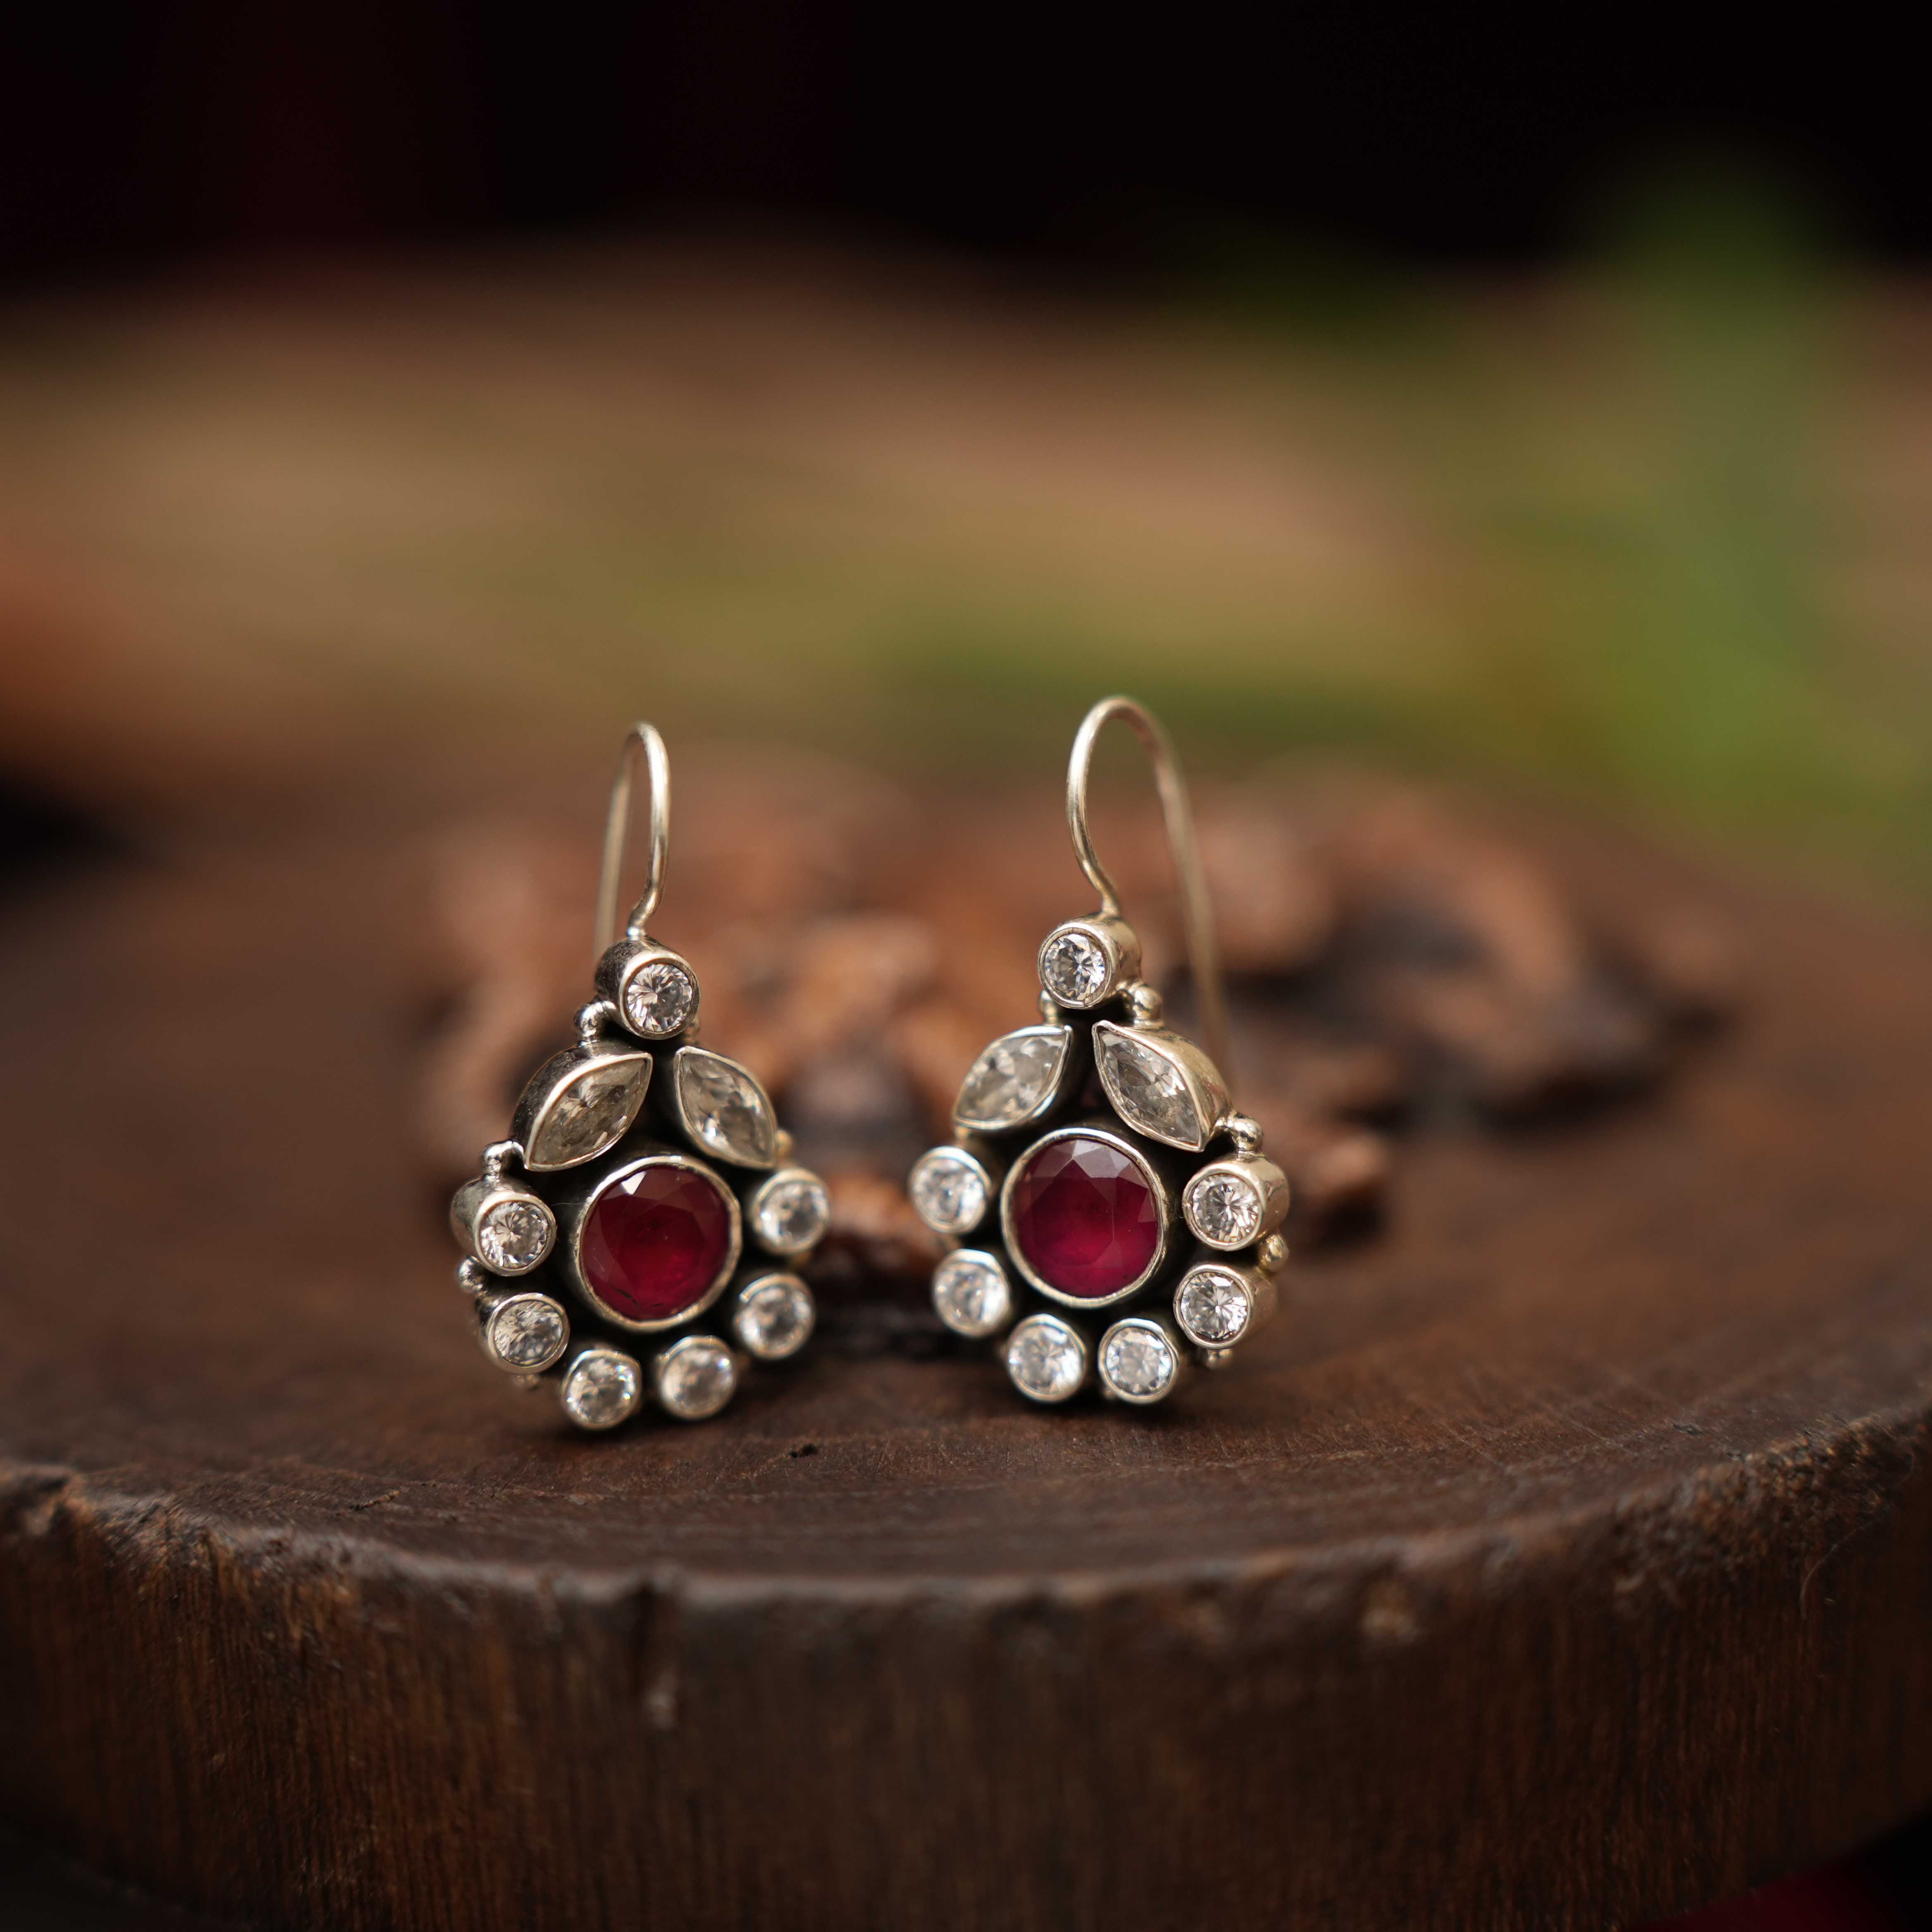 Shilpa 925 Oxidized Silver Earrings - Red